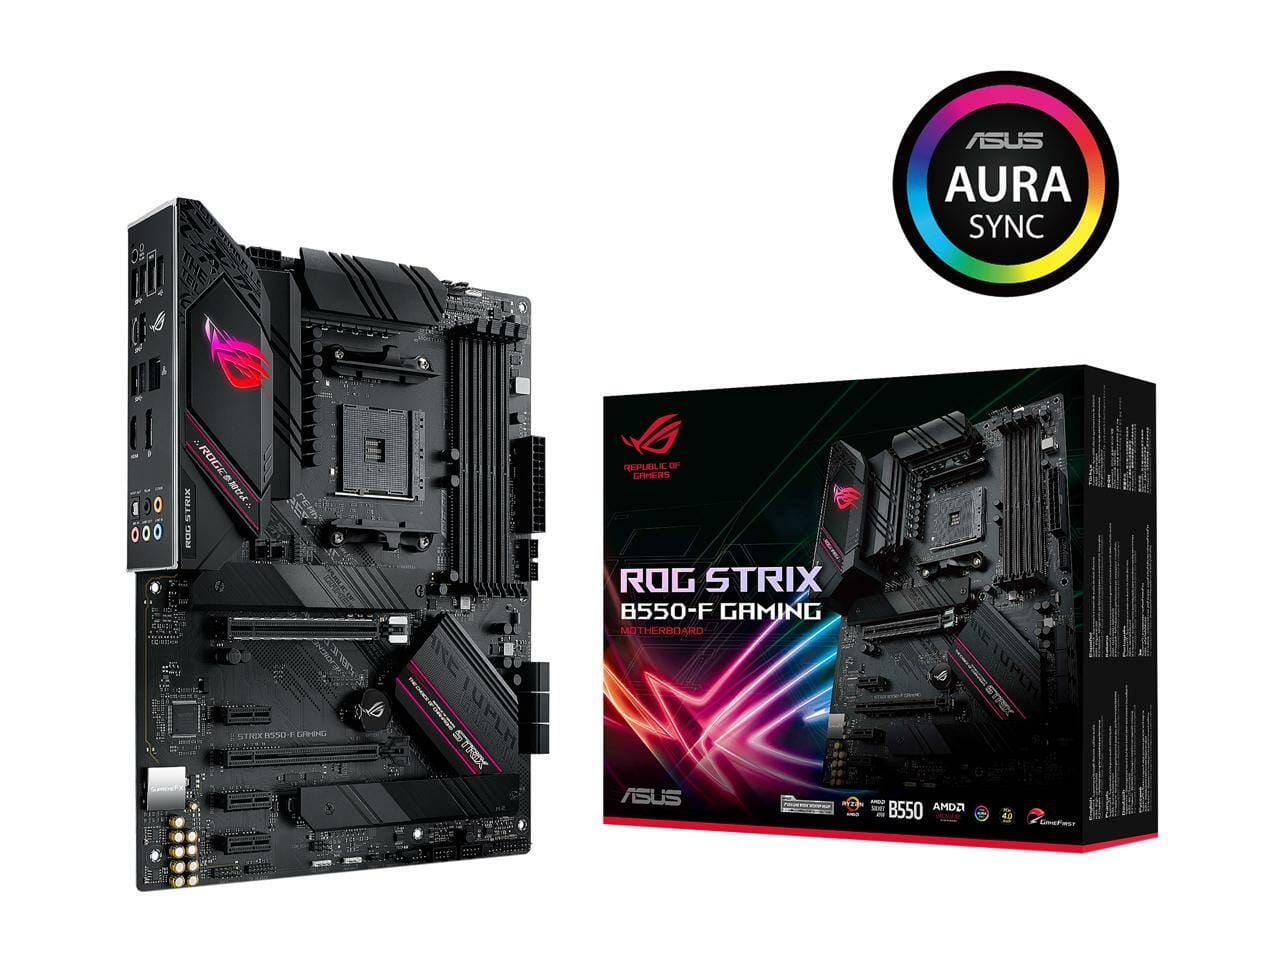 Asus ROG Strix B550-F Gaming AM4 ATX Motherboard